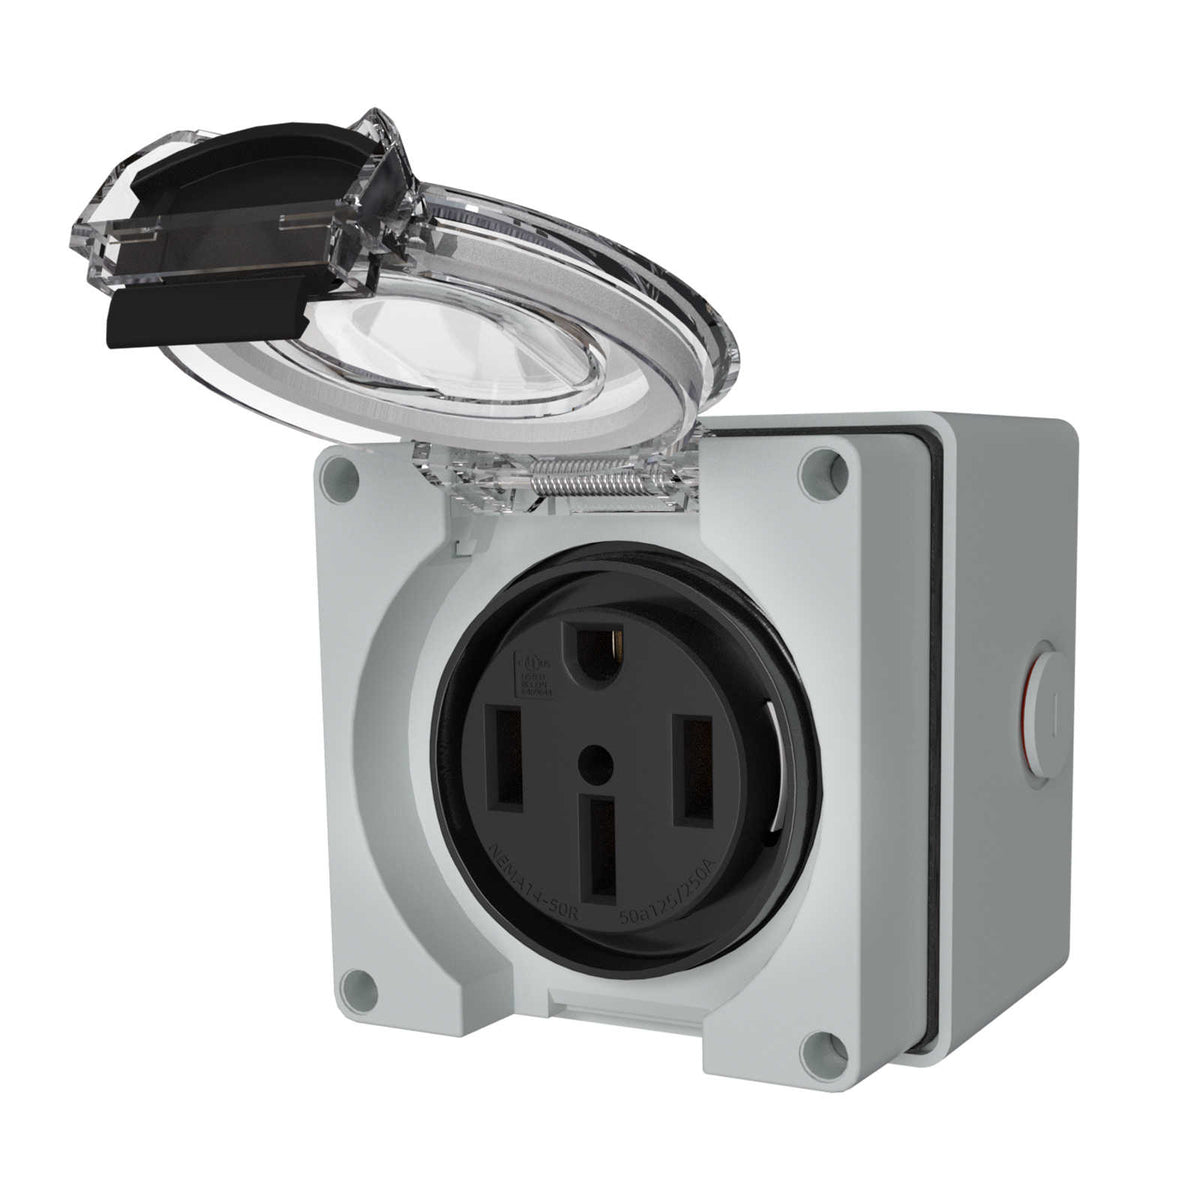 NEMA 14-50R 50Amp RV Power Outlet Box For RVs Electric Vehicles Generators Welding Machines